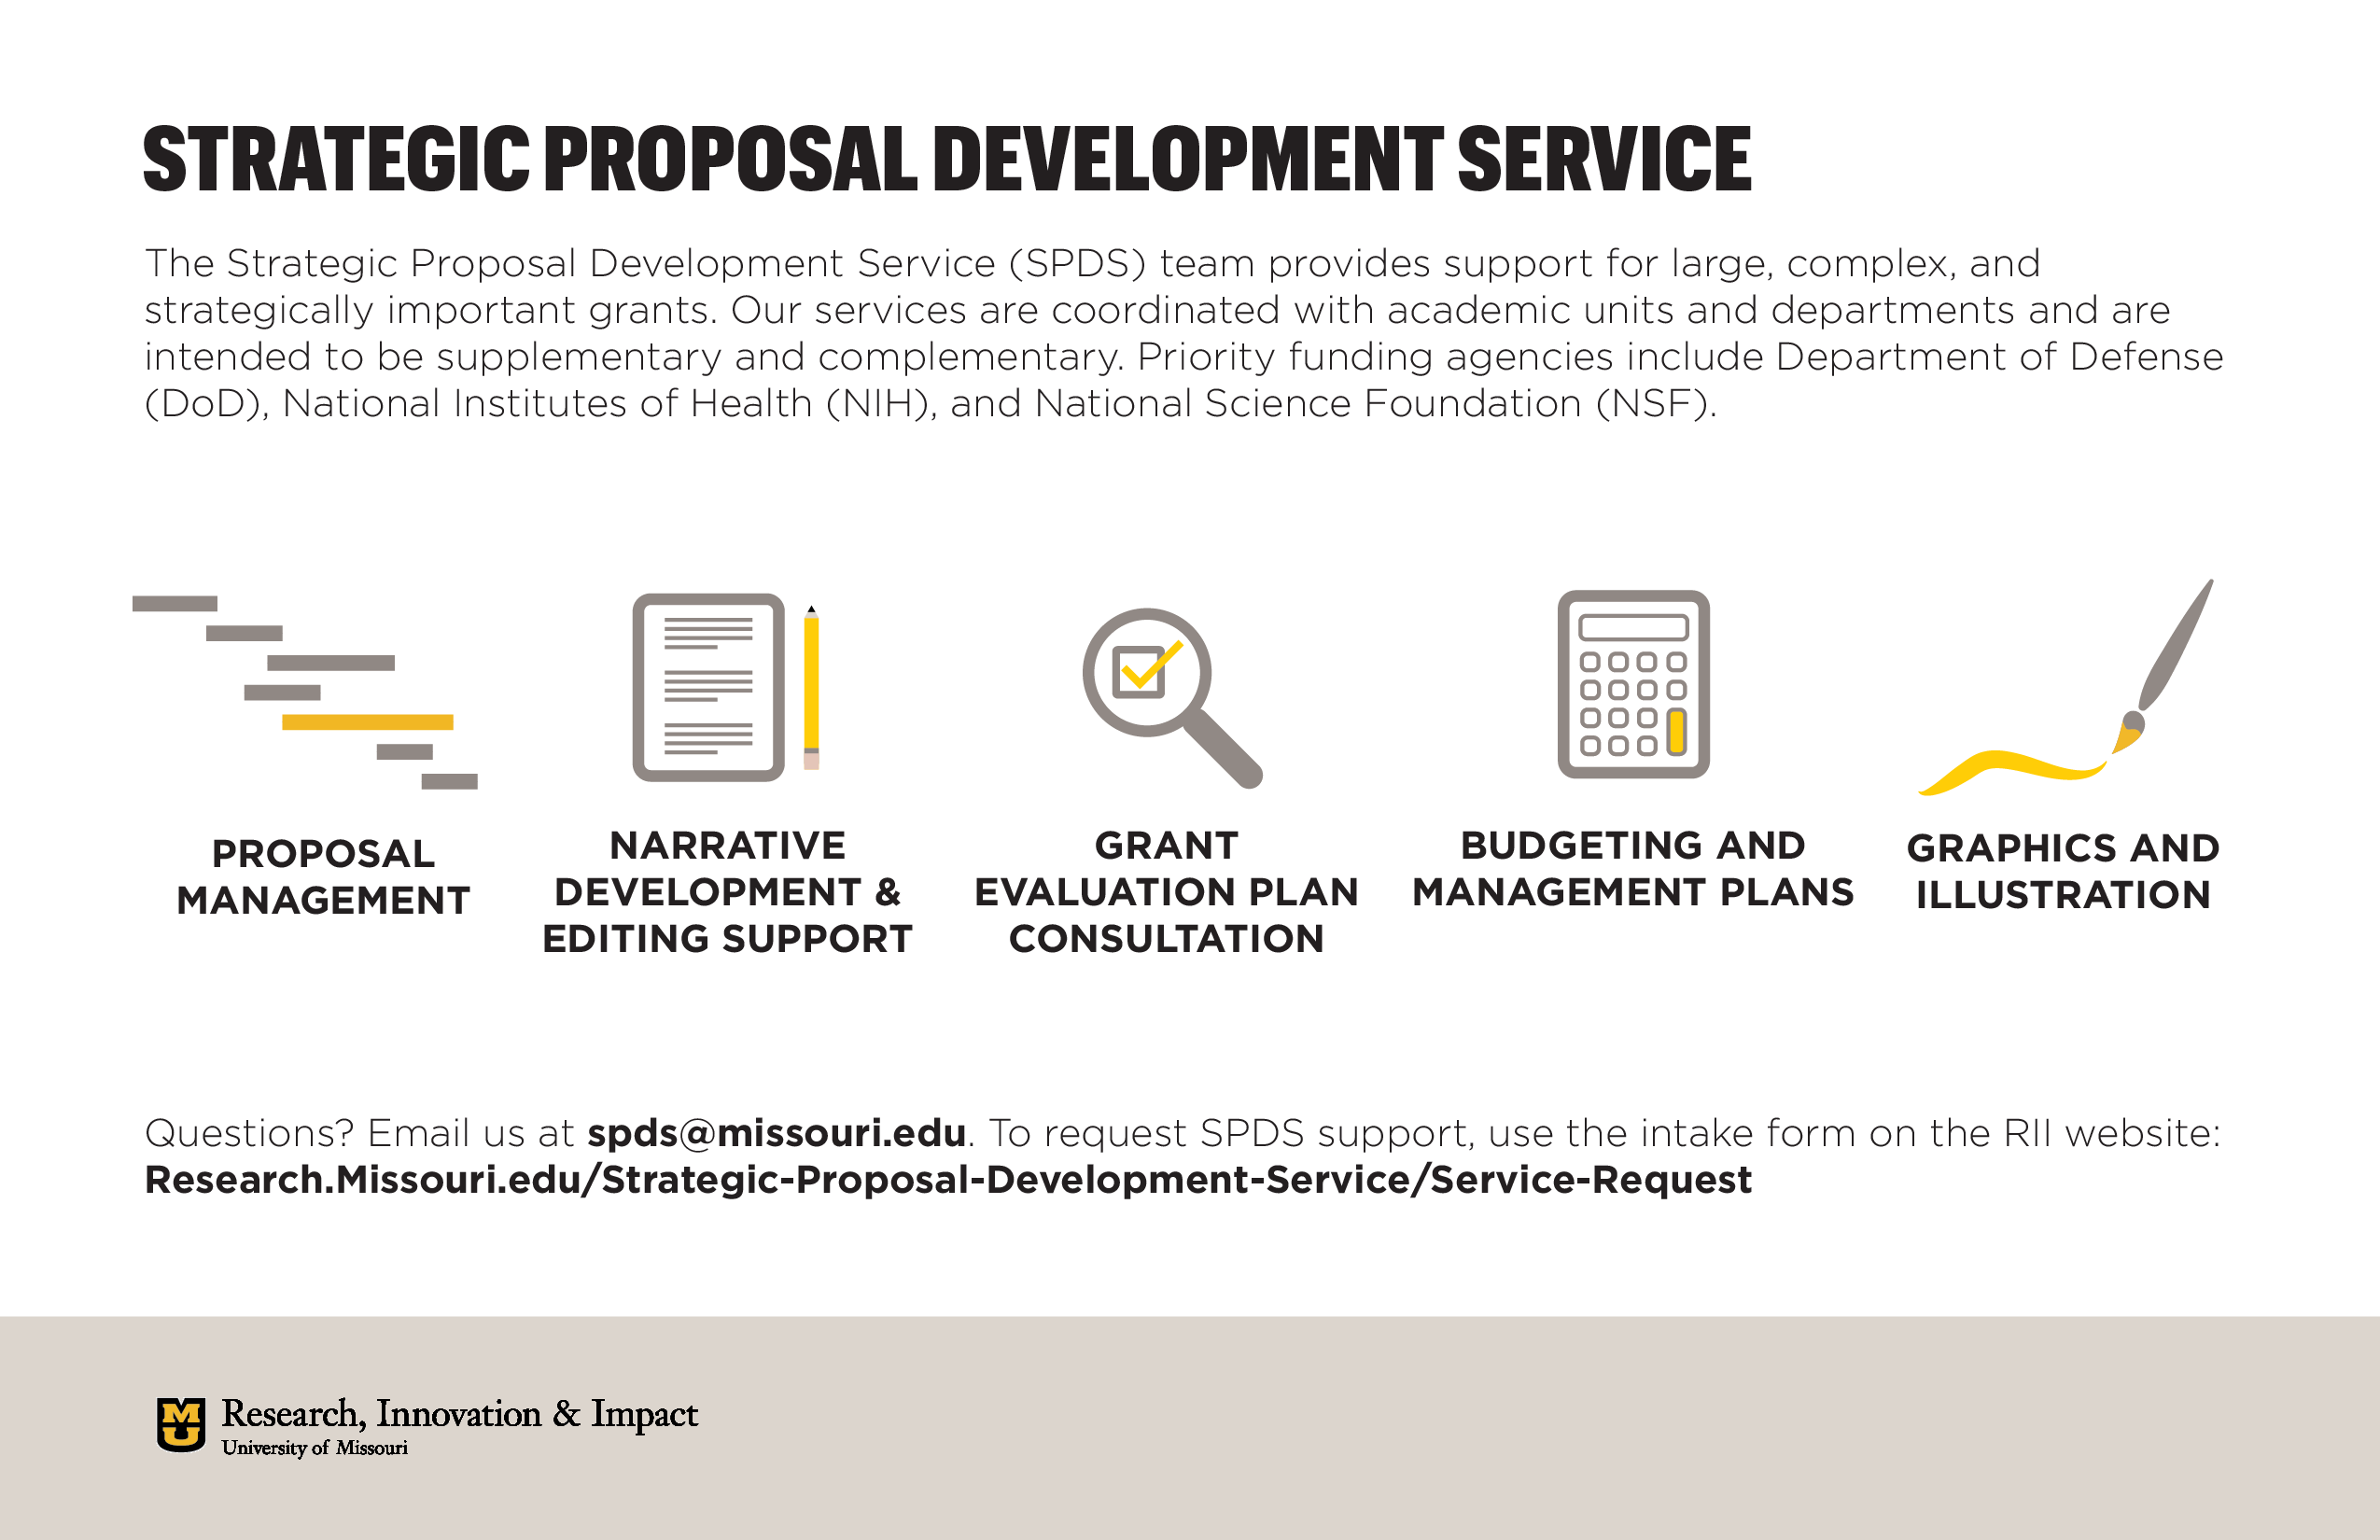 Strategic Proposal Development Service overview handout.